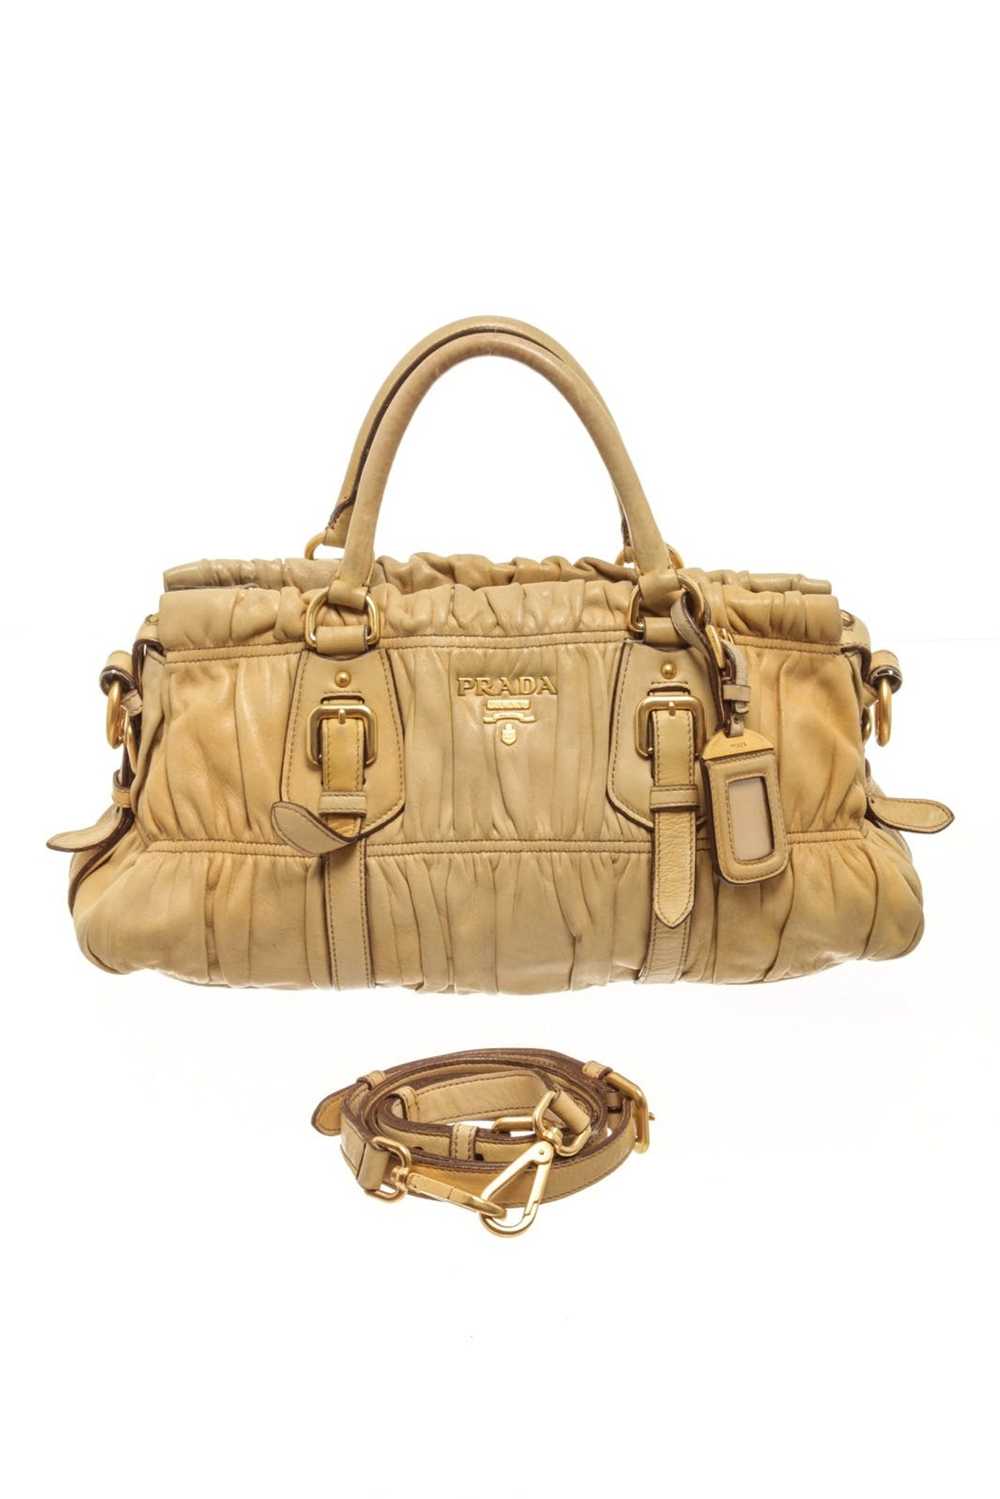 Prada Prada Light Brown Leather Shoulder Bag - image 1